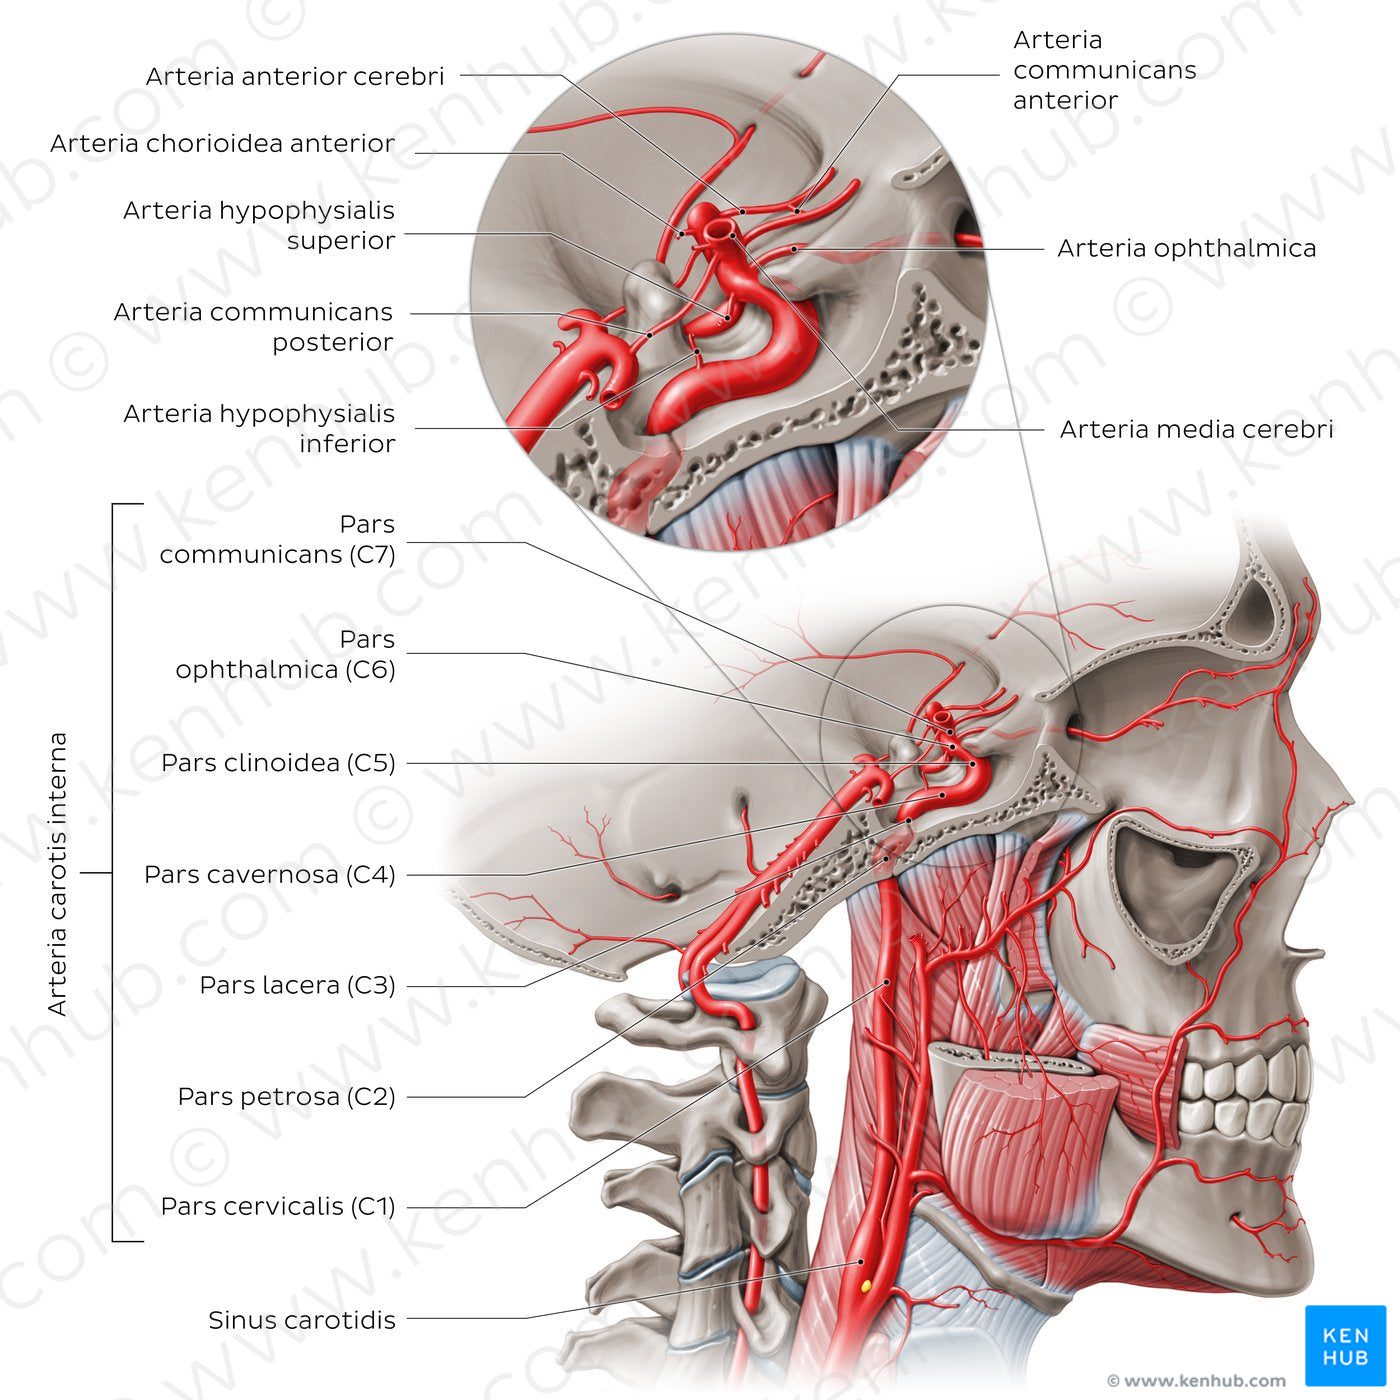 Arteries of the head: Internal carotid artery (Latin)